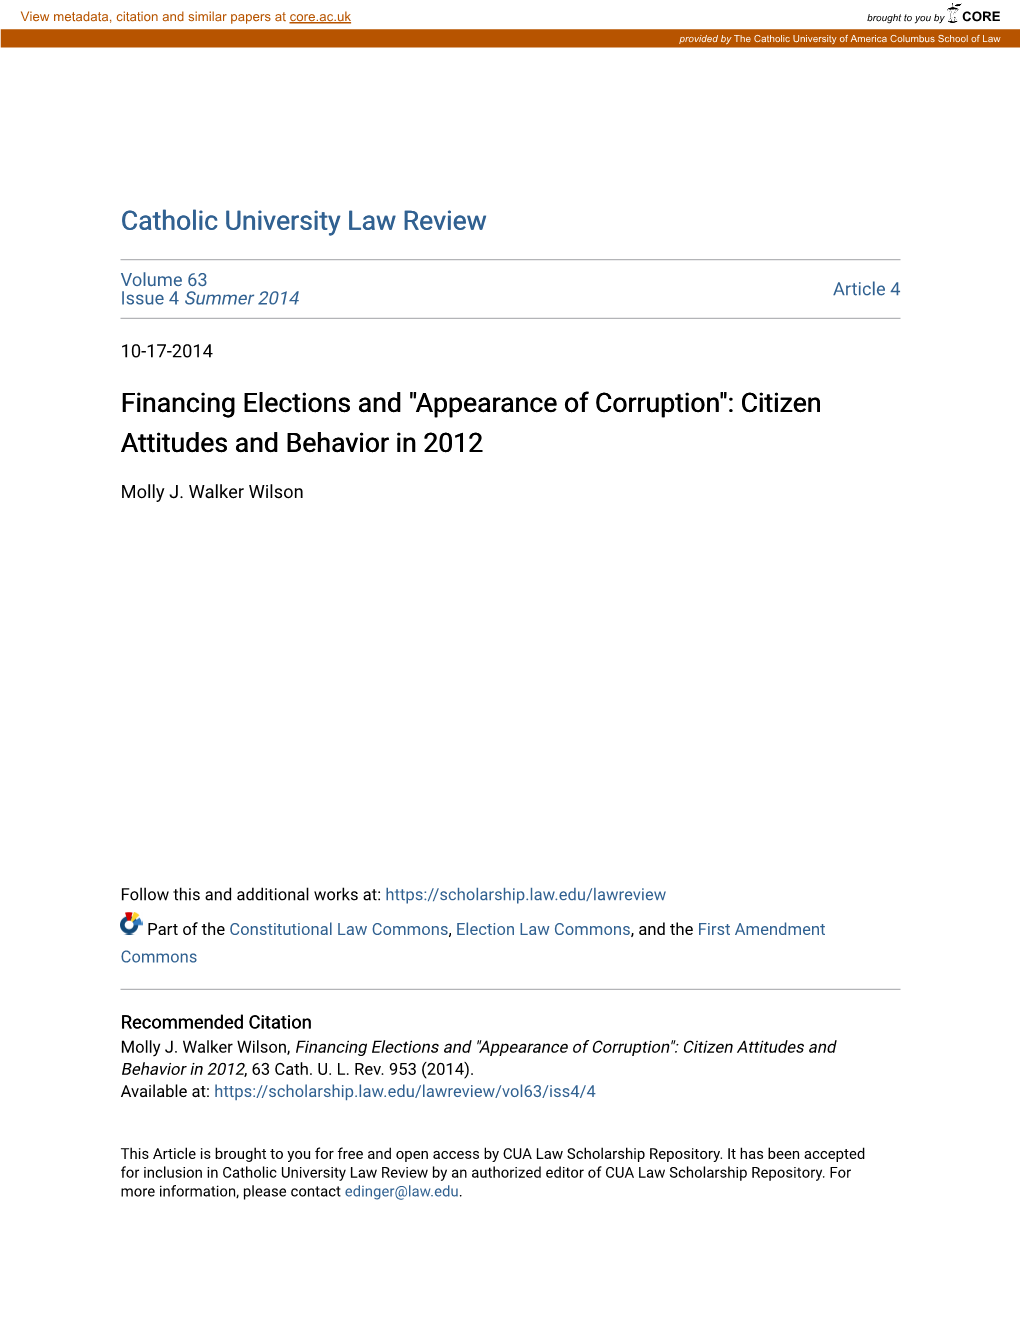 Appearance of Corruption": Citizen Attitudes and Behavior in 2012